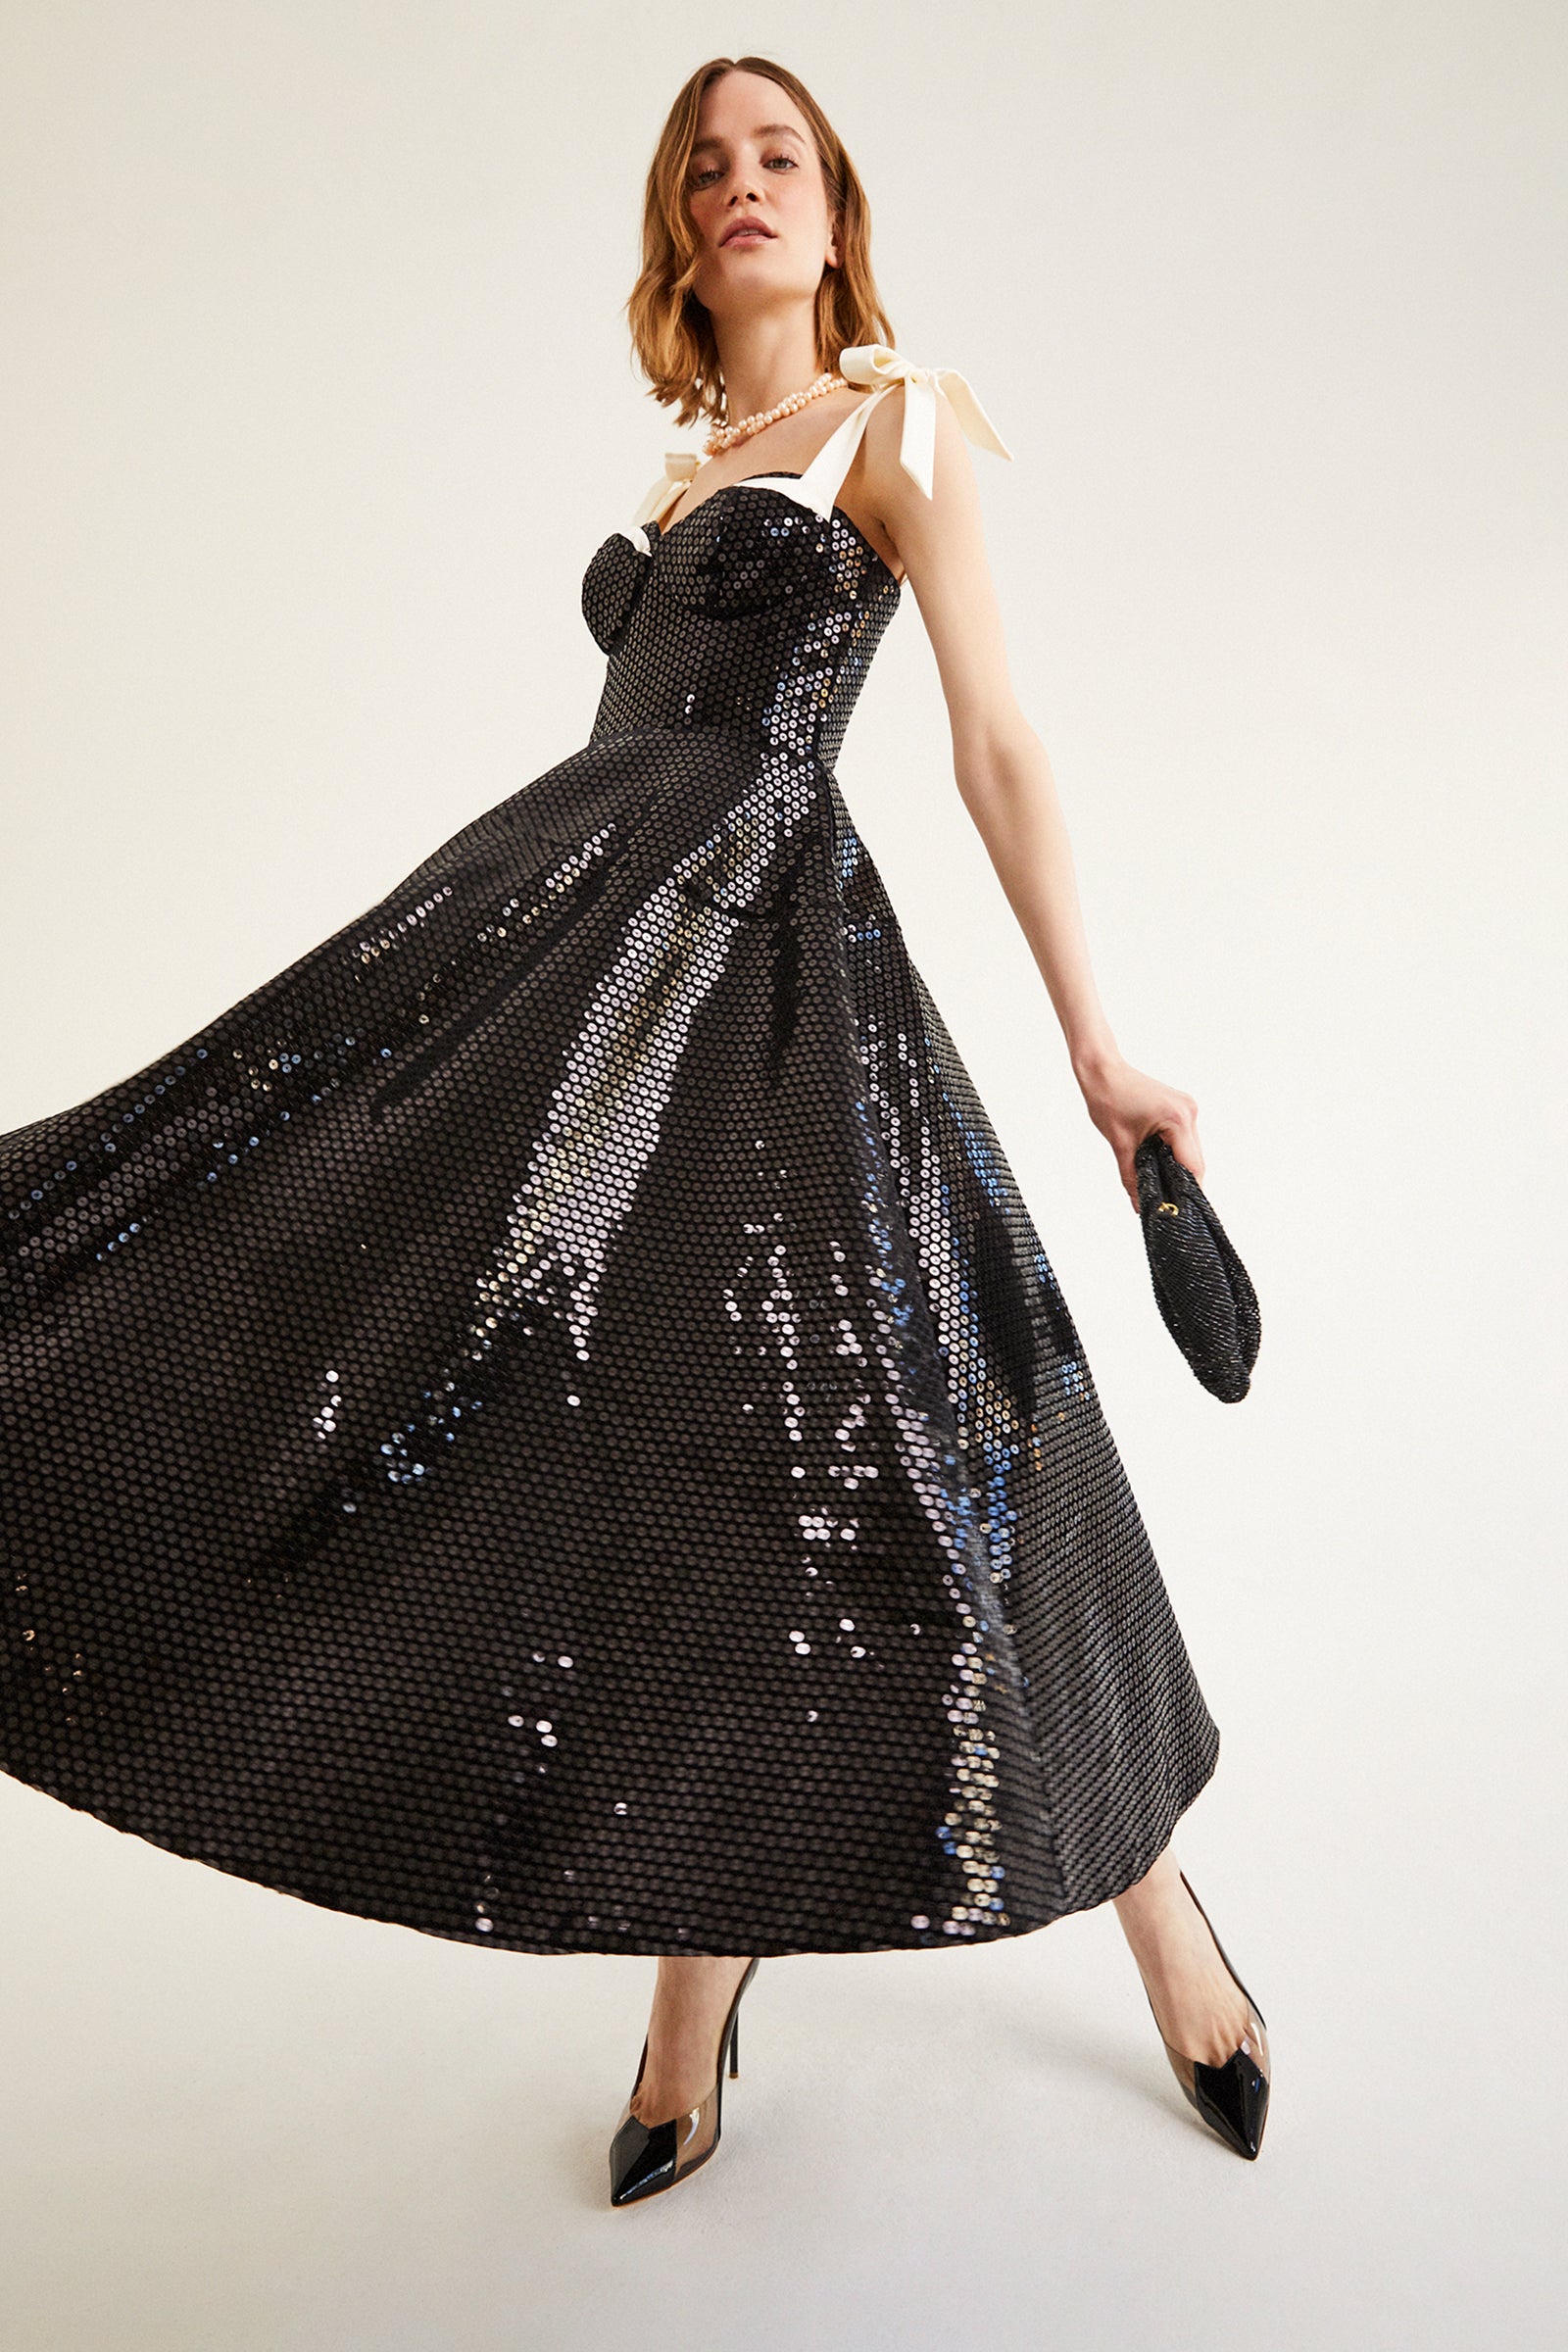 The NIKEETA Black Sequin Corset Back Mermaid Formal Gown